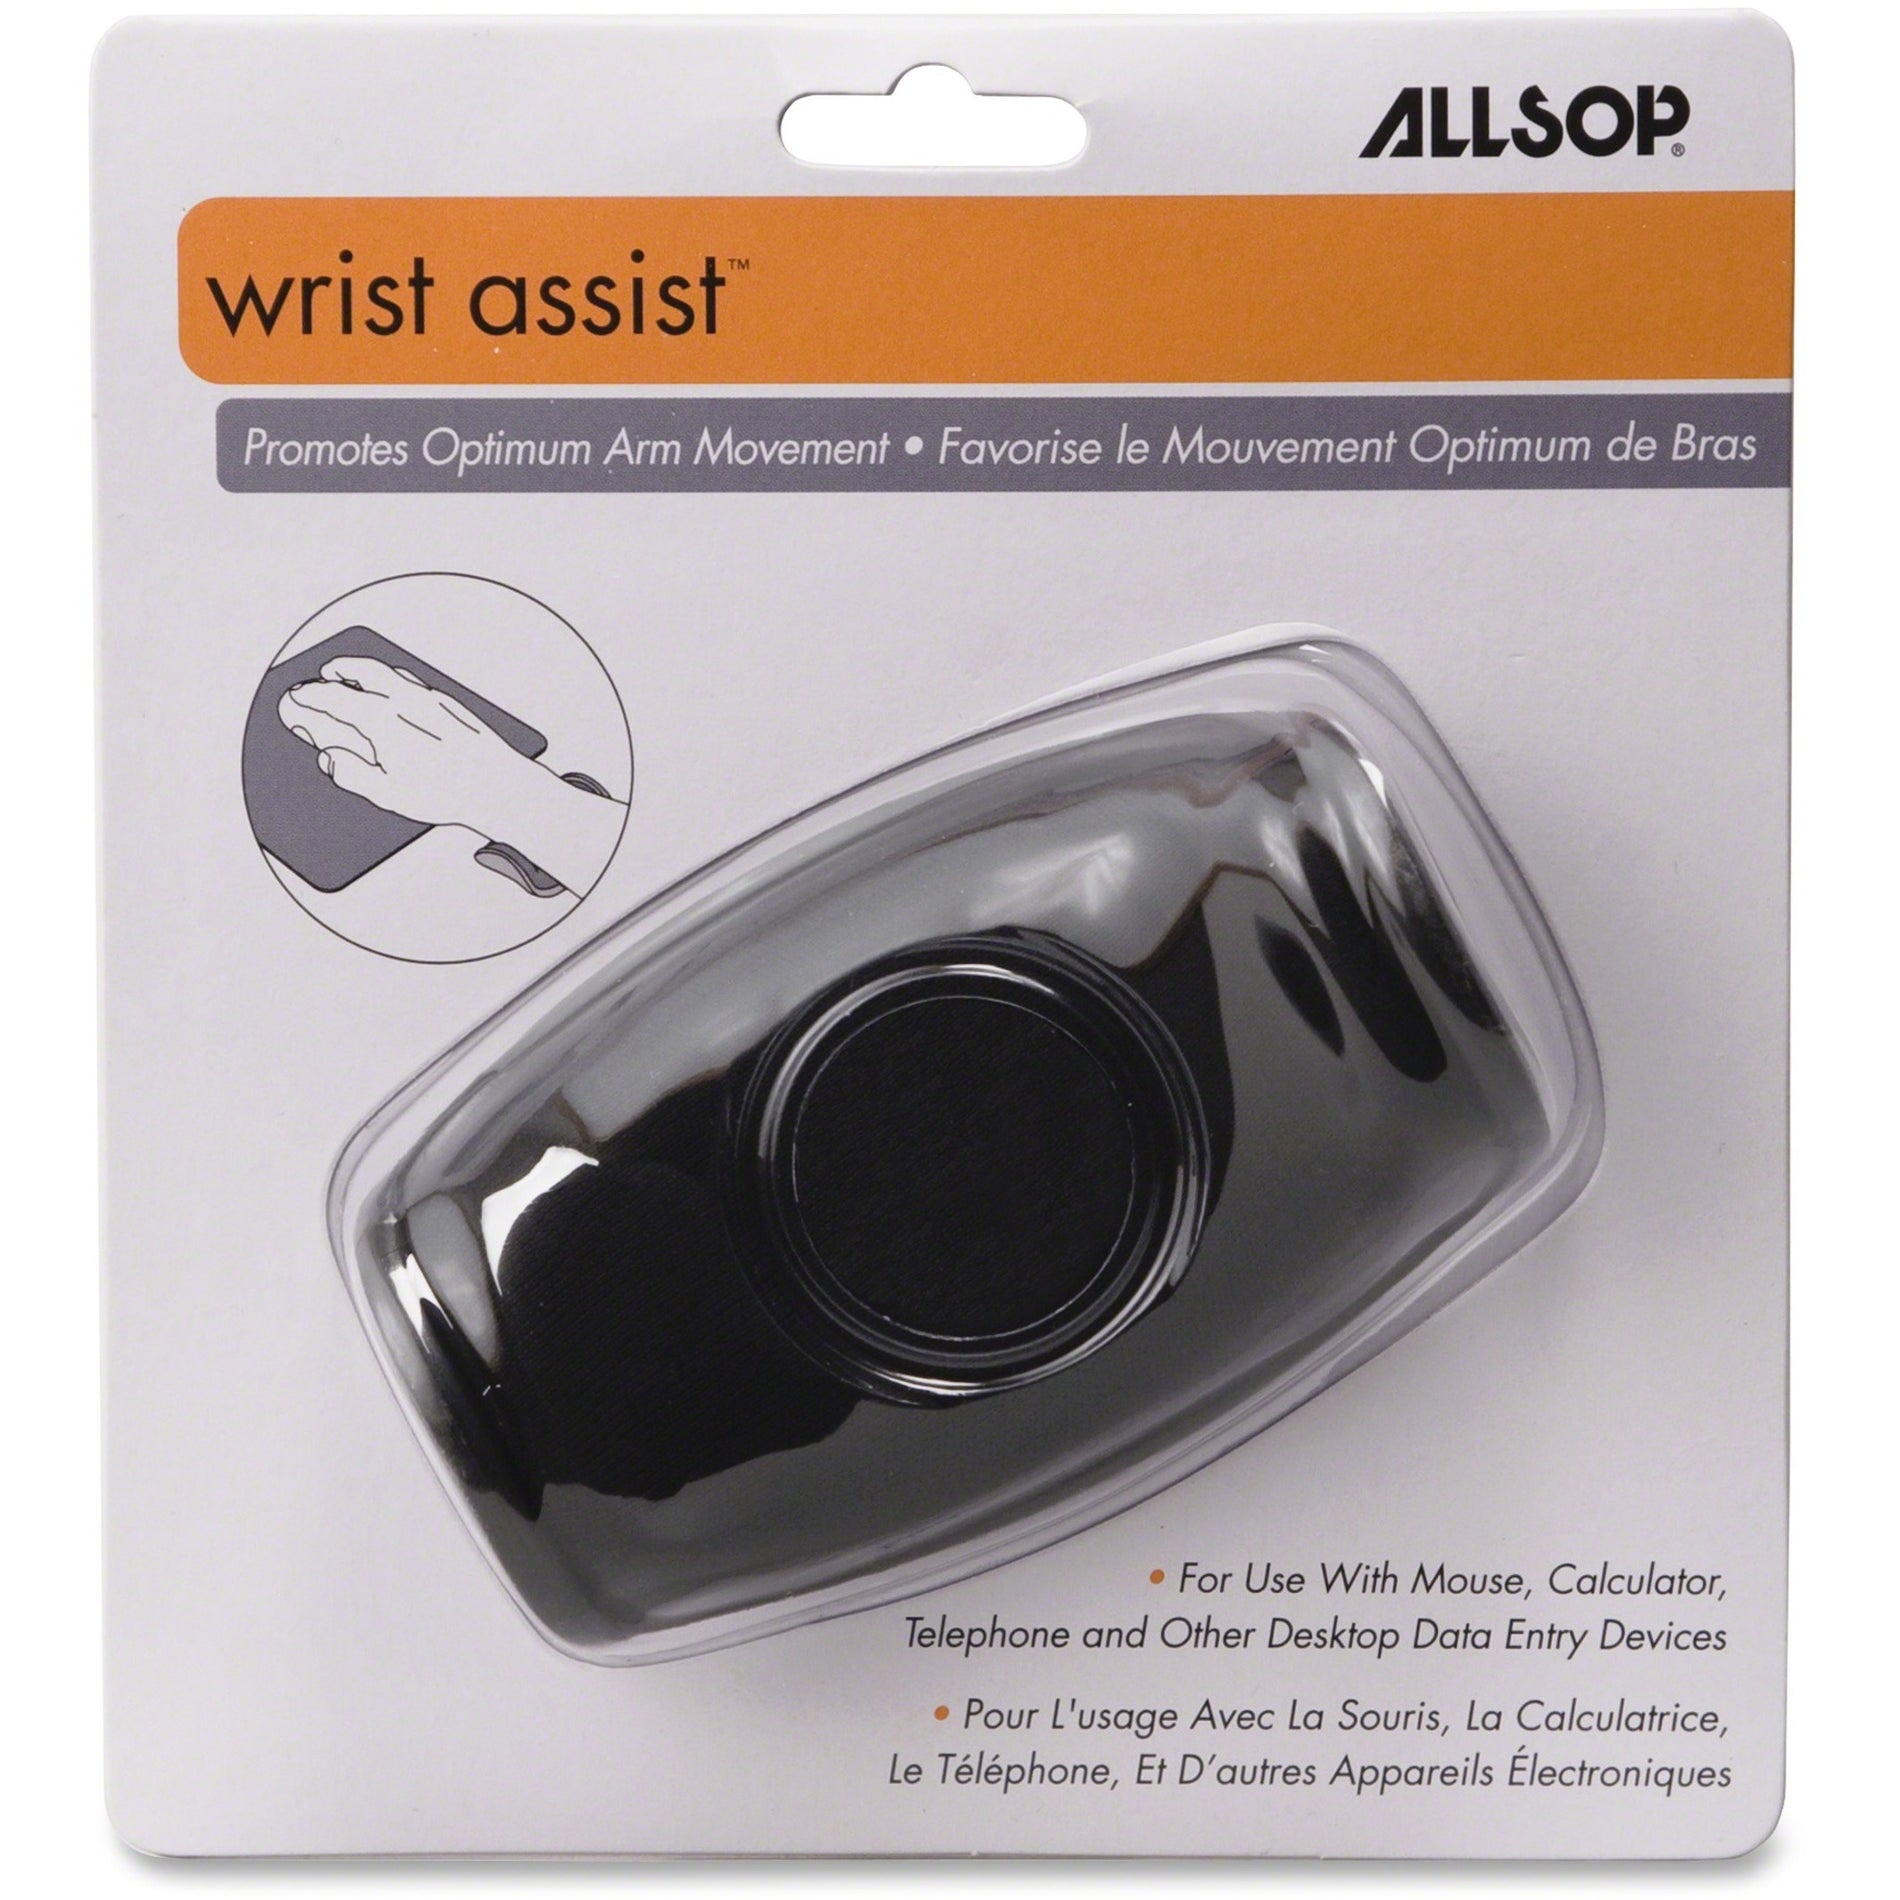 Allsop 29538 Ergo Wrist Assist - Black, Cradles Wrist for Ergonomic Support